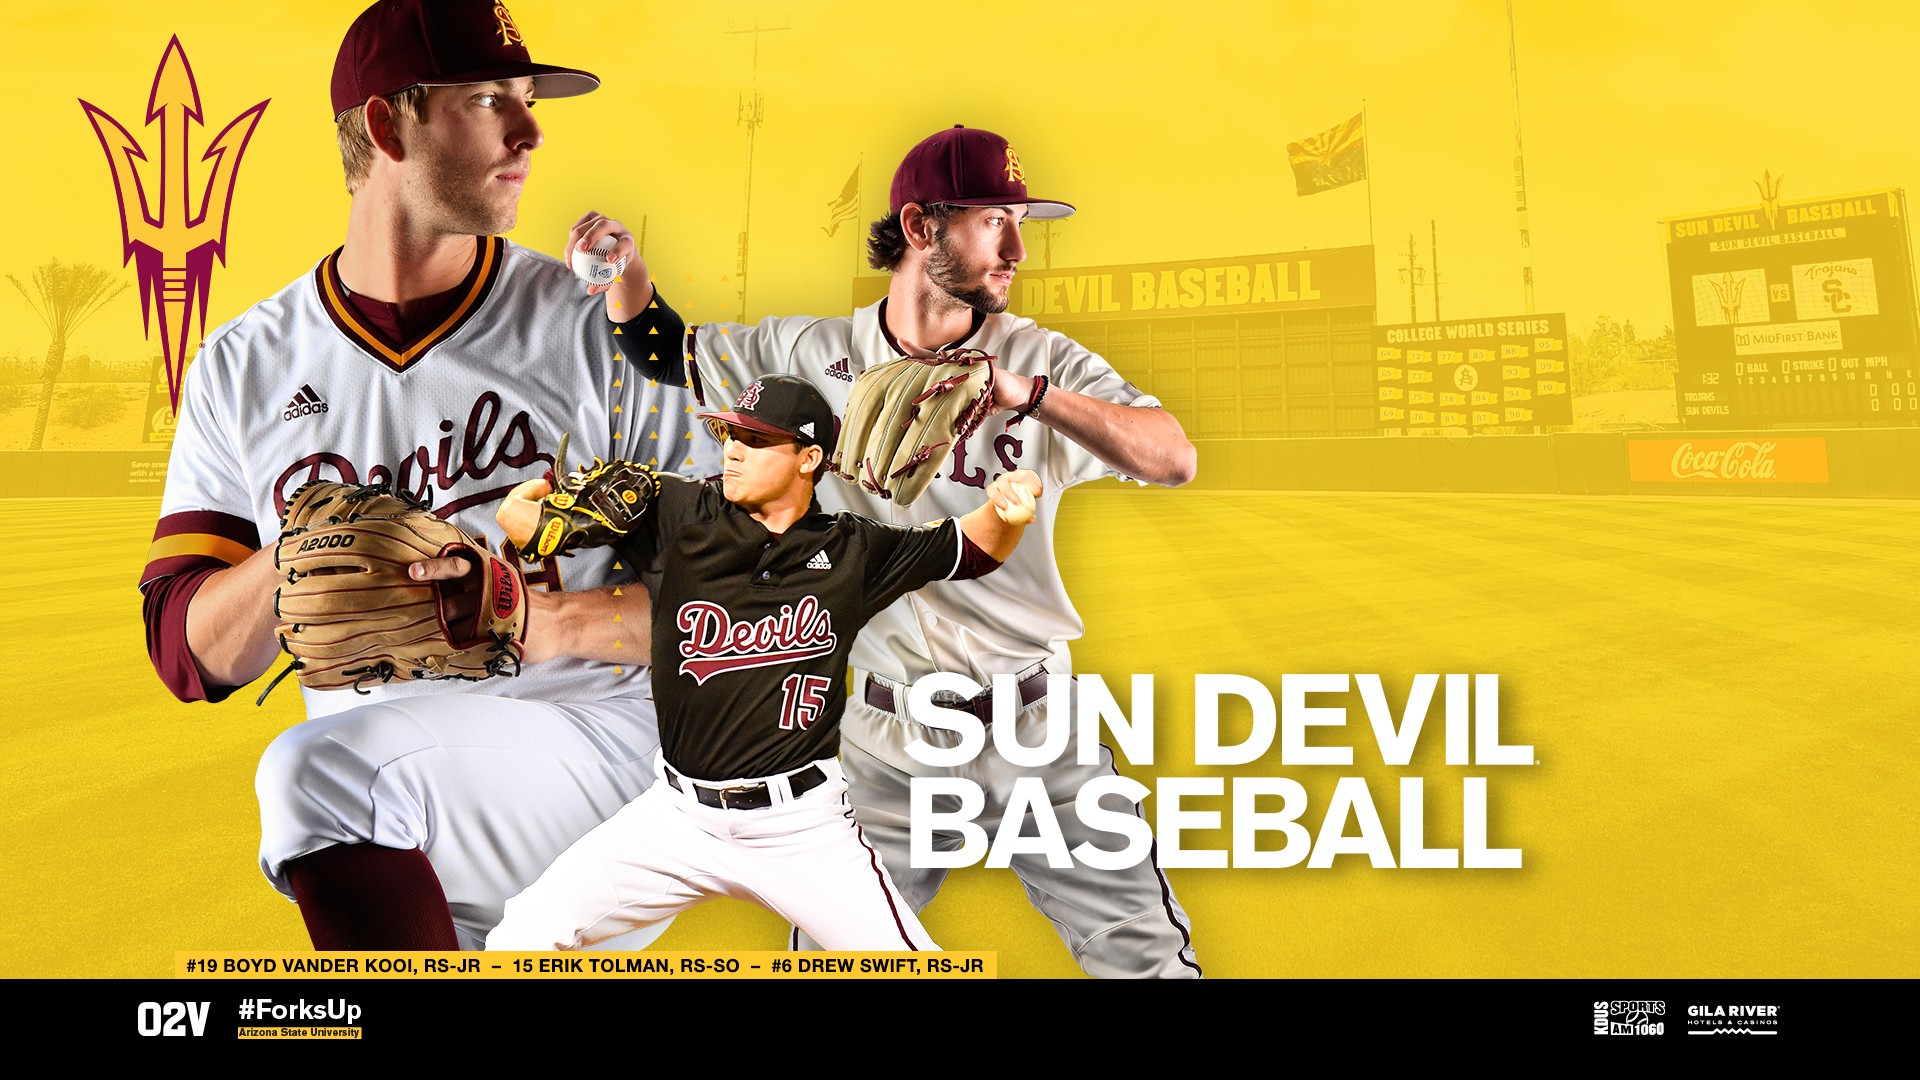 Arizona State Baseball Posters, Phone Wallpaper and Desktop Background State University Athletics